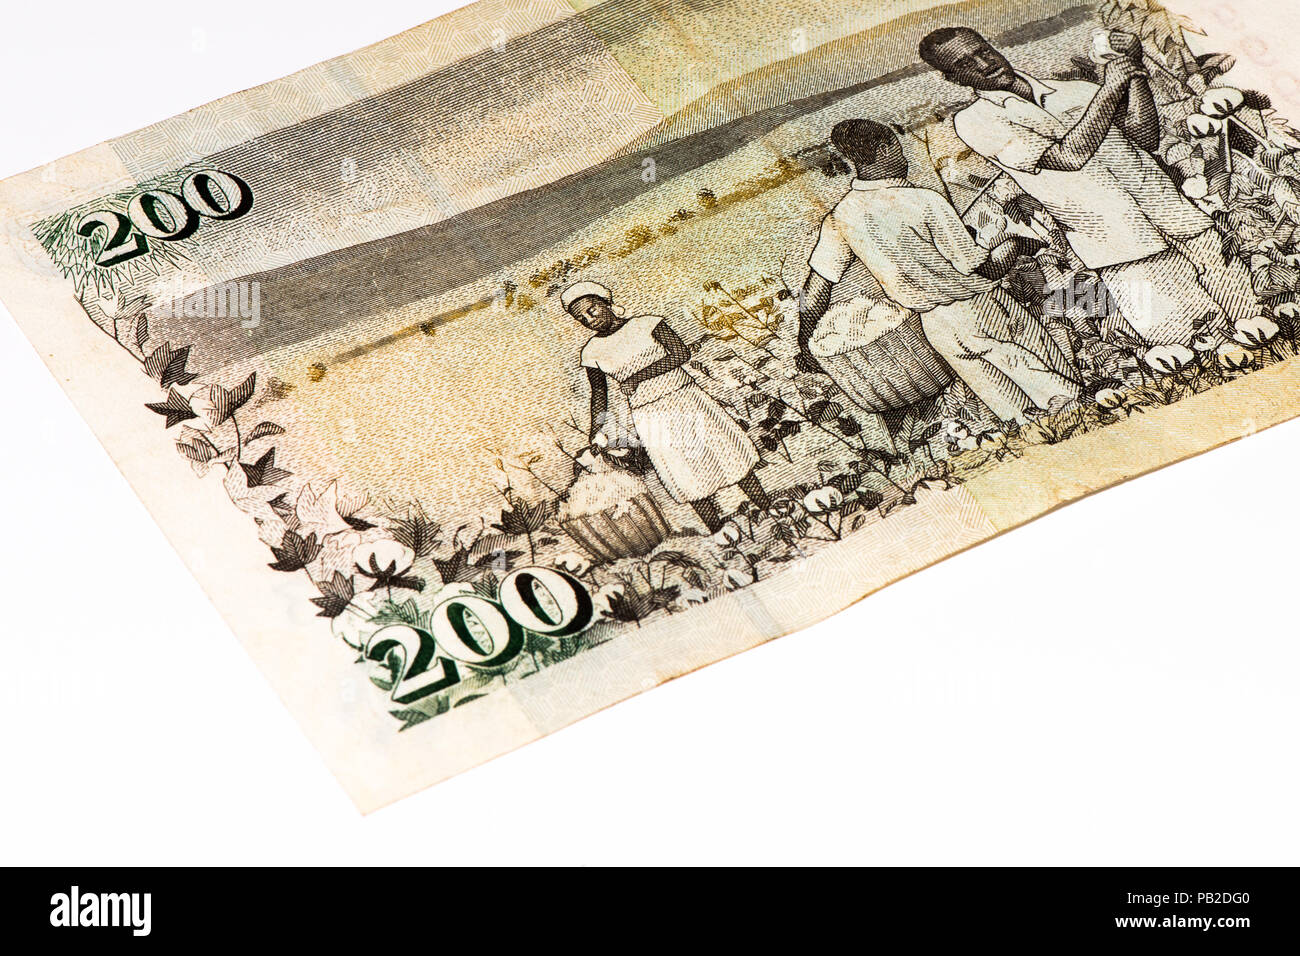 200 Kenyan shillings bank note of Kenya. Kenyan shilling is the national currency of Kenya Stock Photo